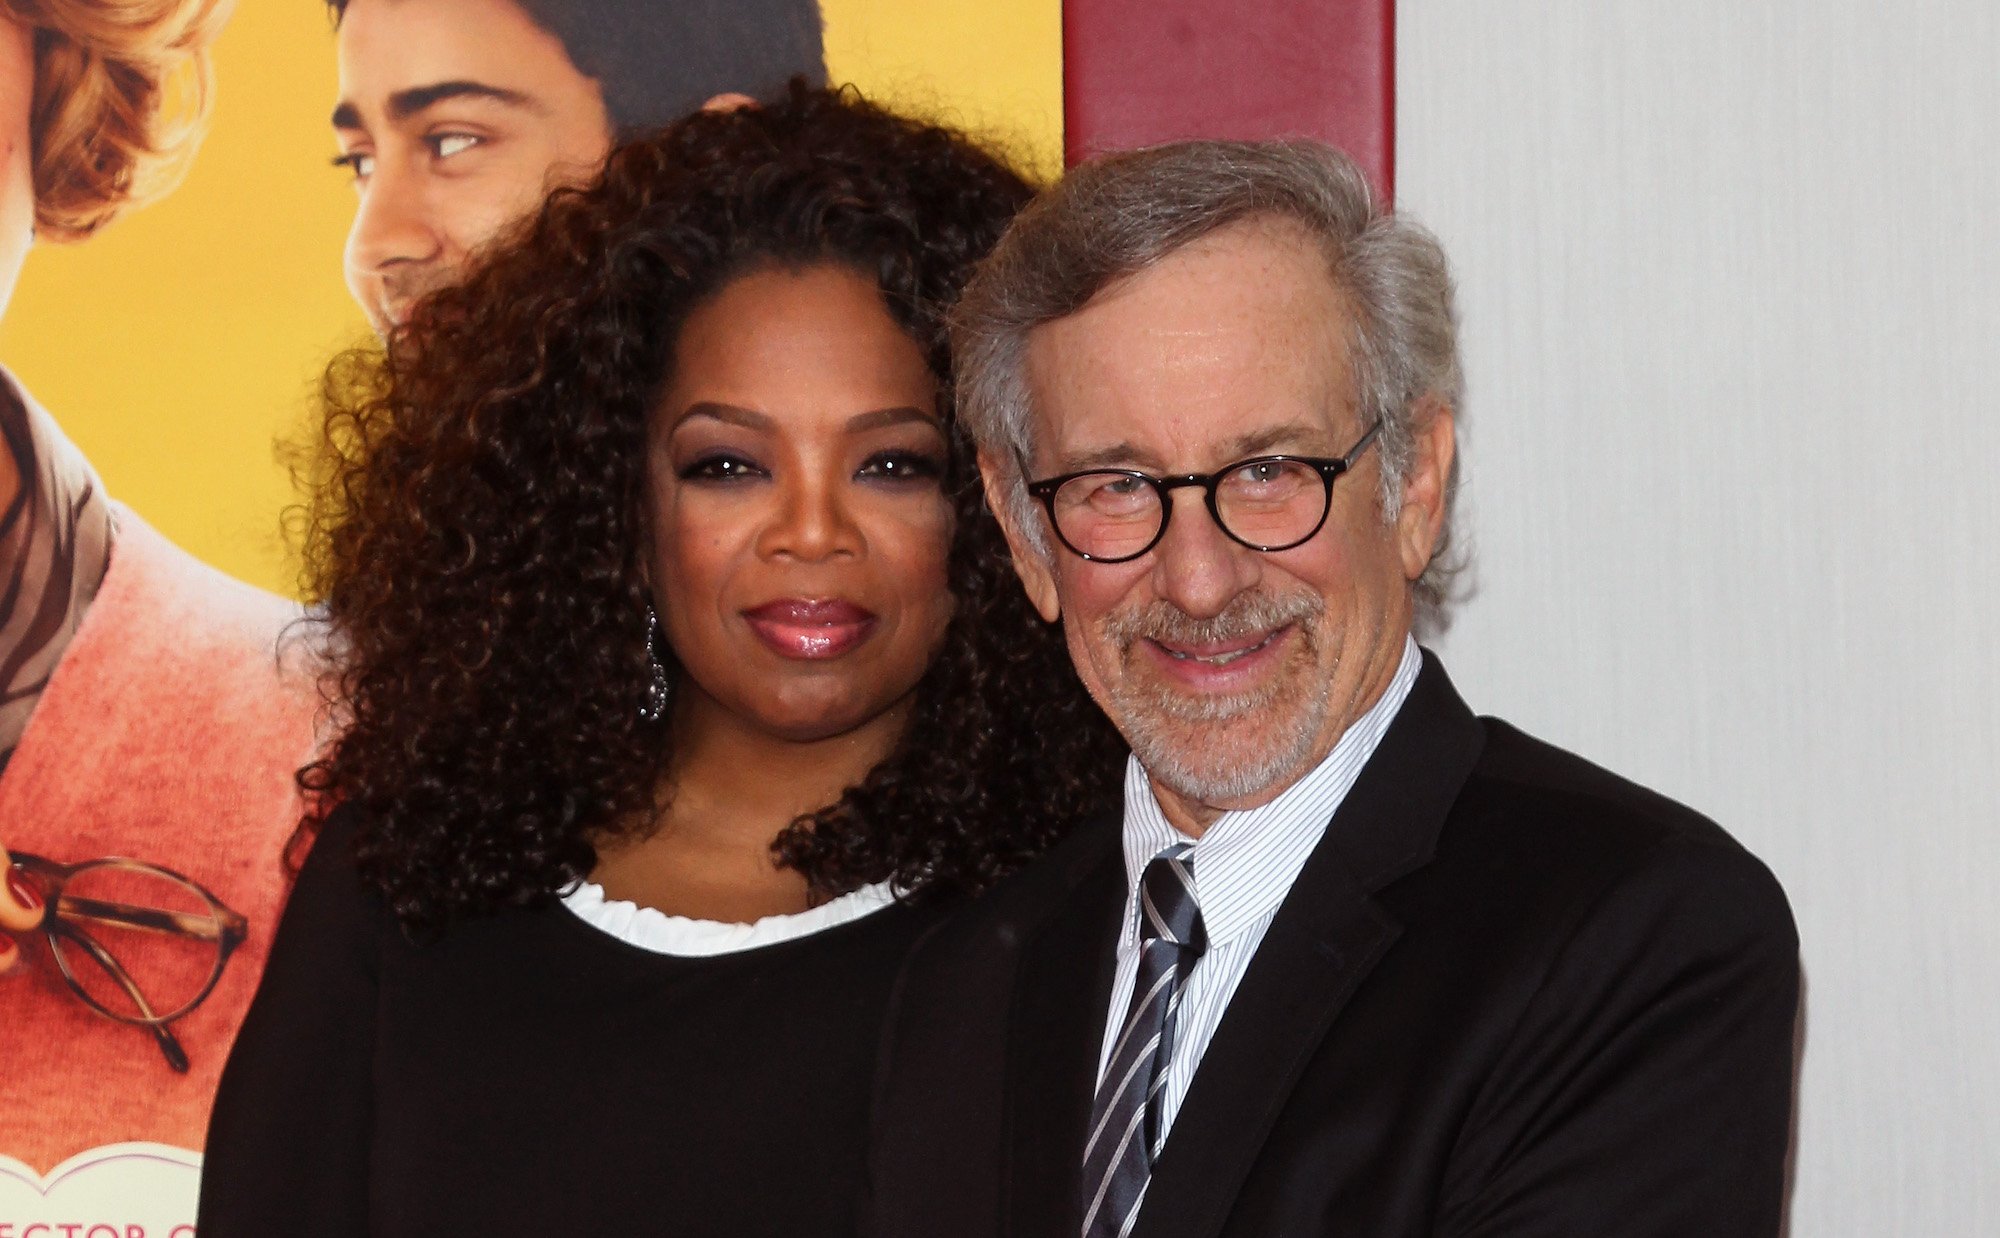 Oprah Winfrey and Steven Spielberg attending "The Hundred-Foot Journey" New York Premiere in 2014